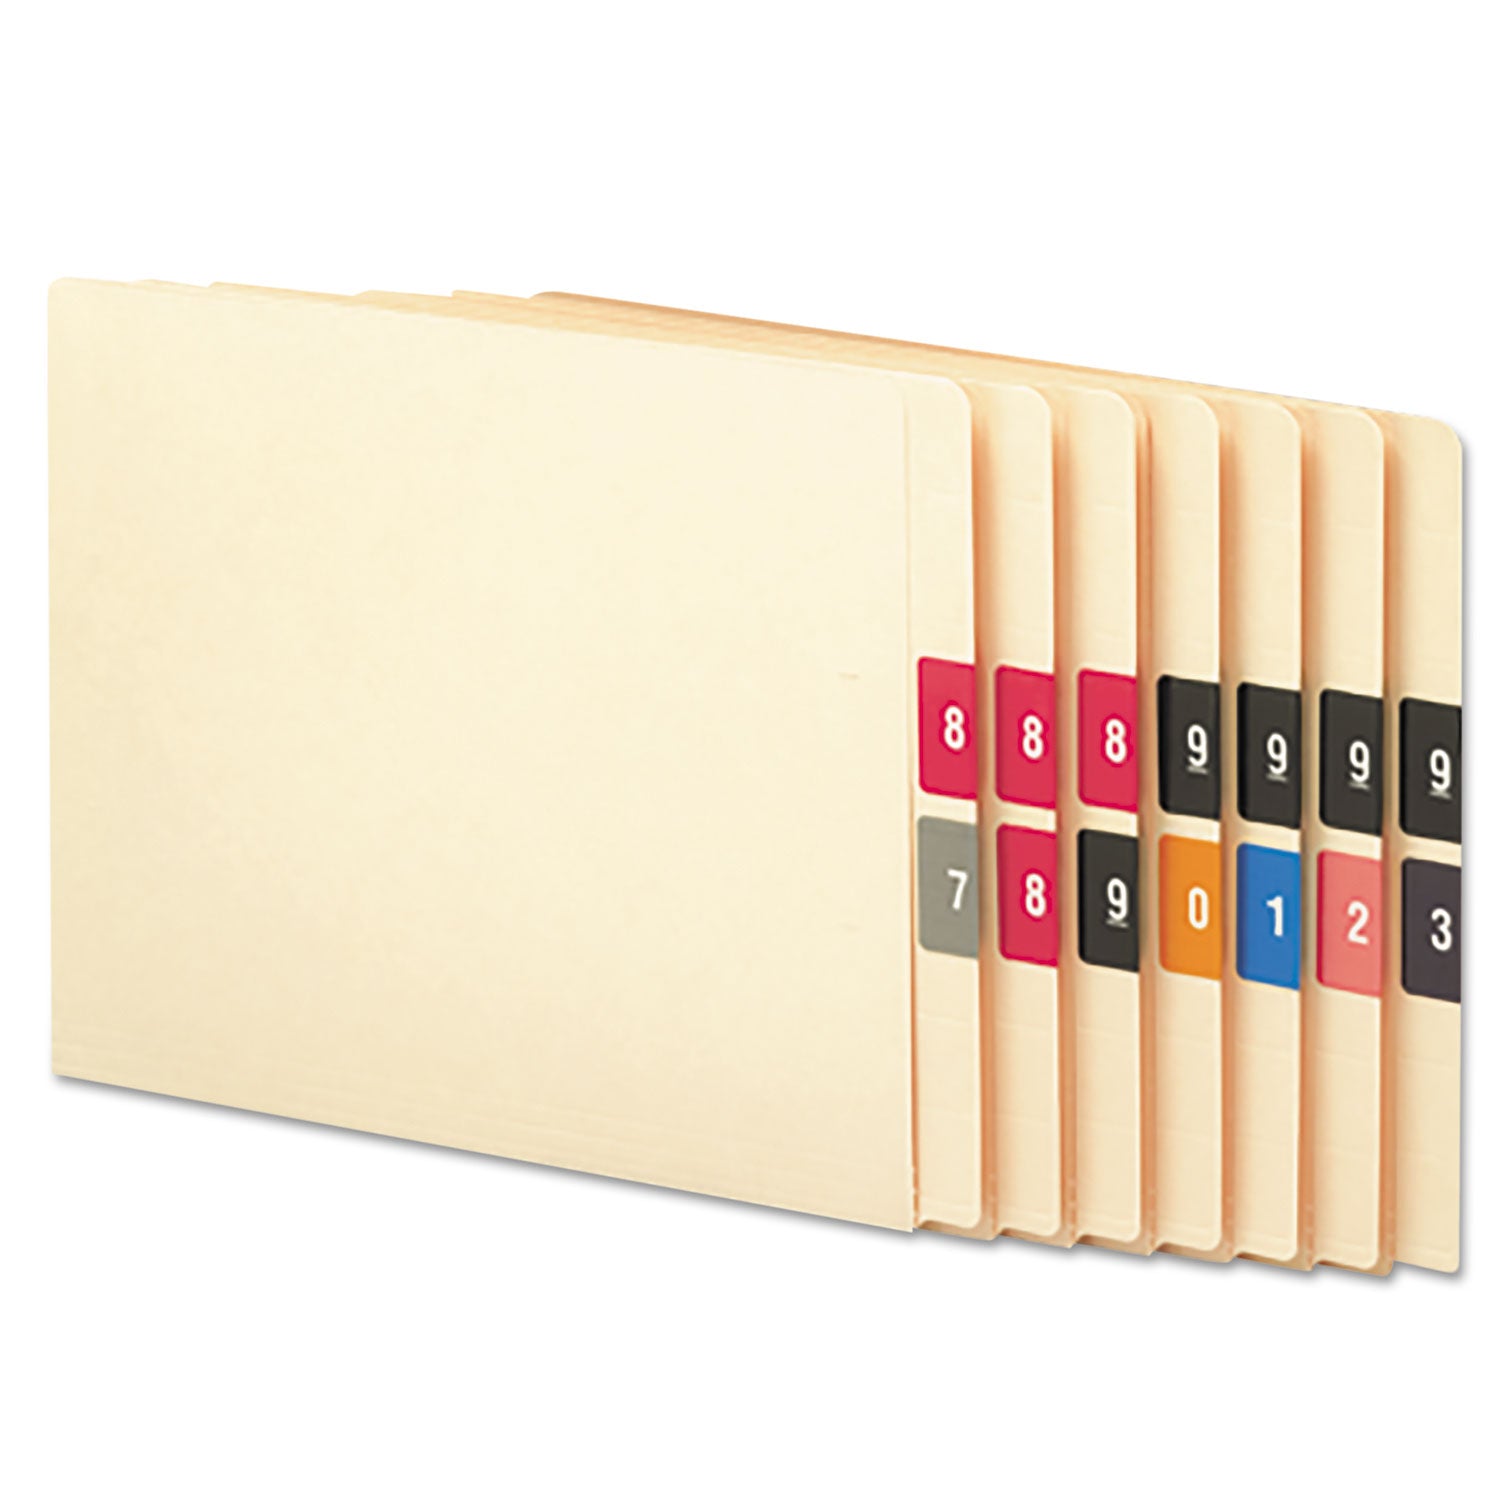 Numerical End Tab File Folder Labels, 0-9, 1.5 x 1.5, Assorted, 250/Roll, 10 Rolls/Box - 